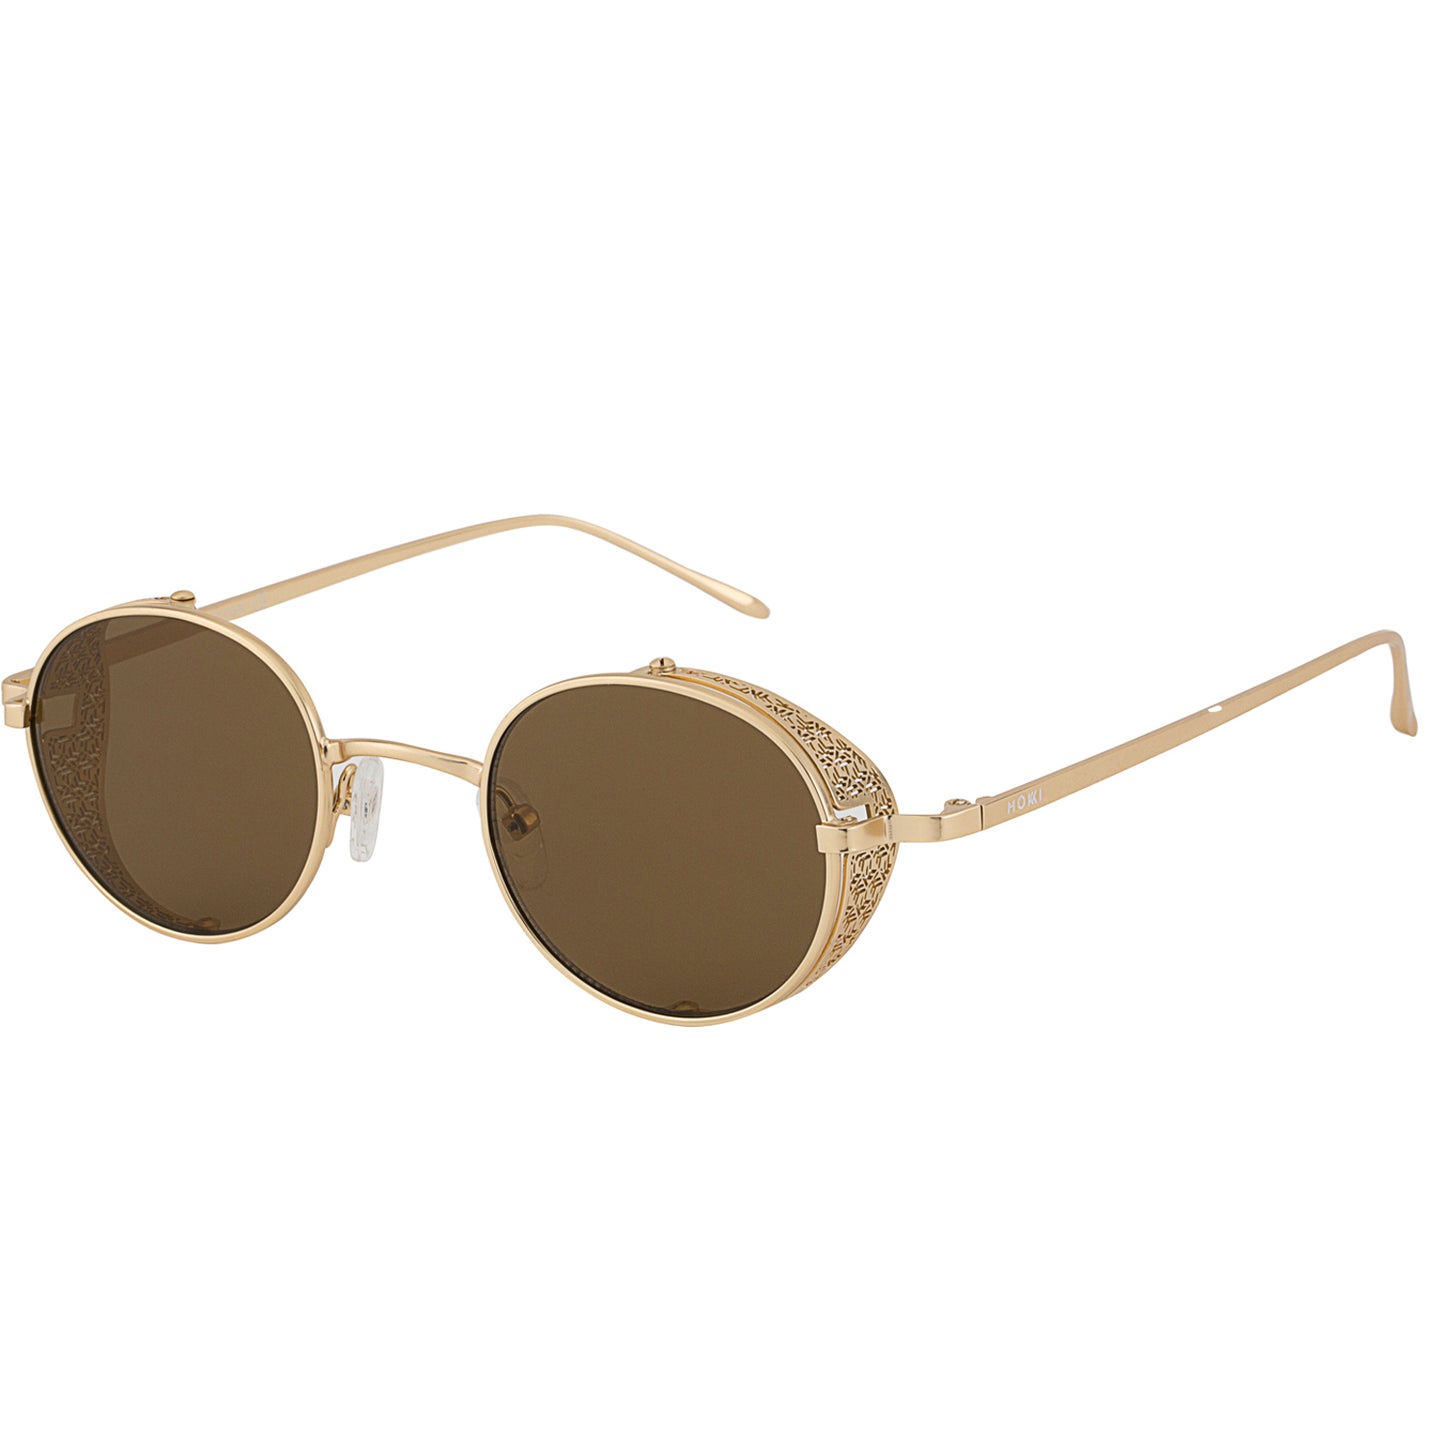 Mokki Round Explorer Sunglasses in gold